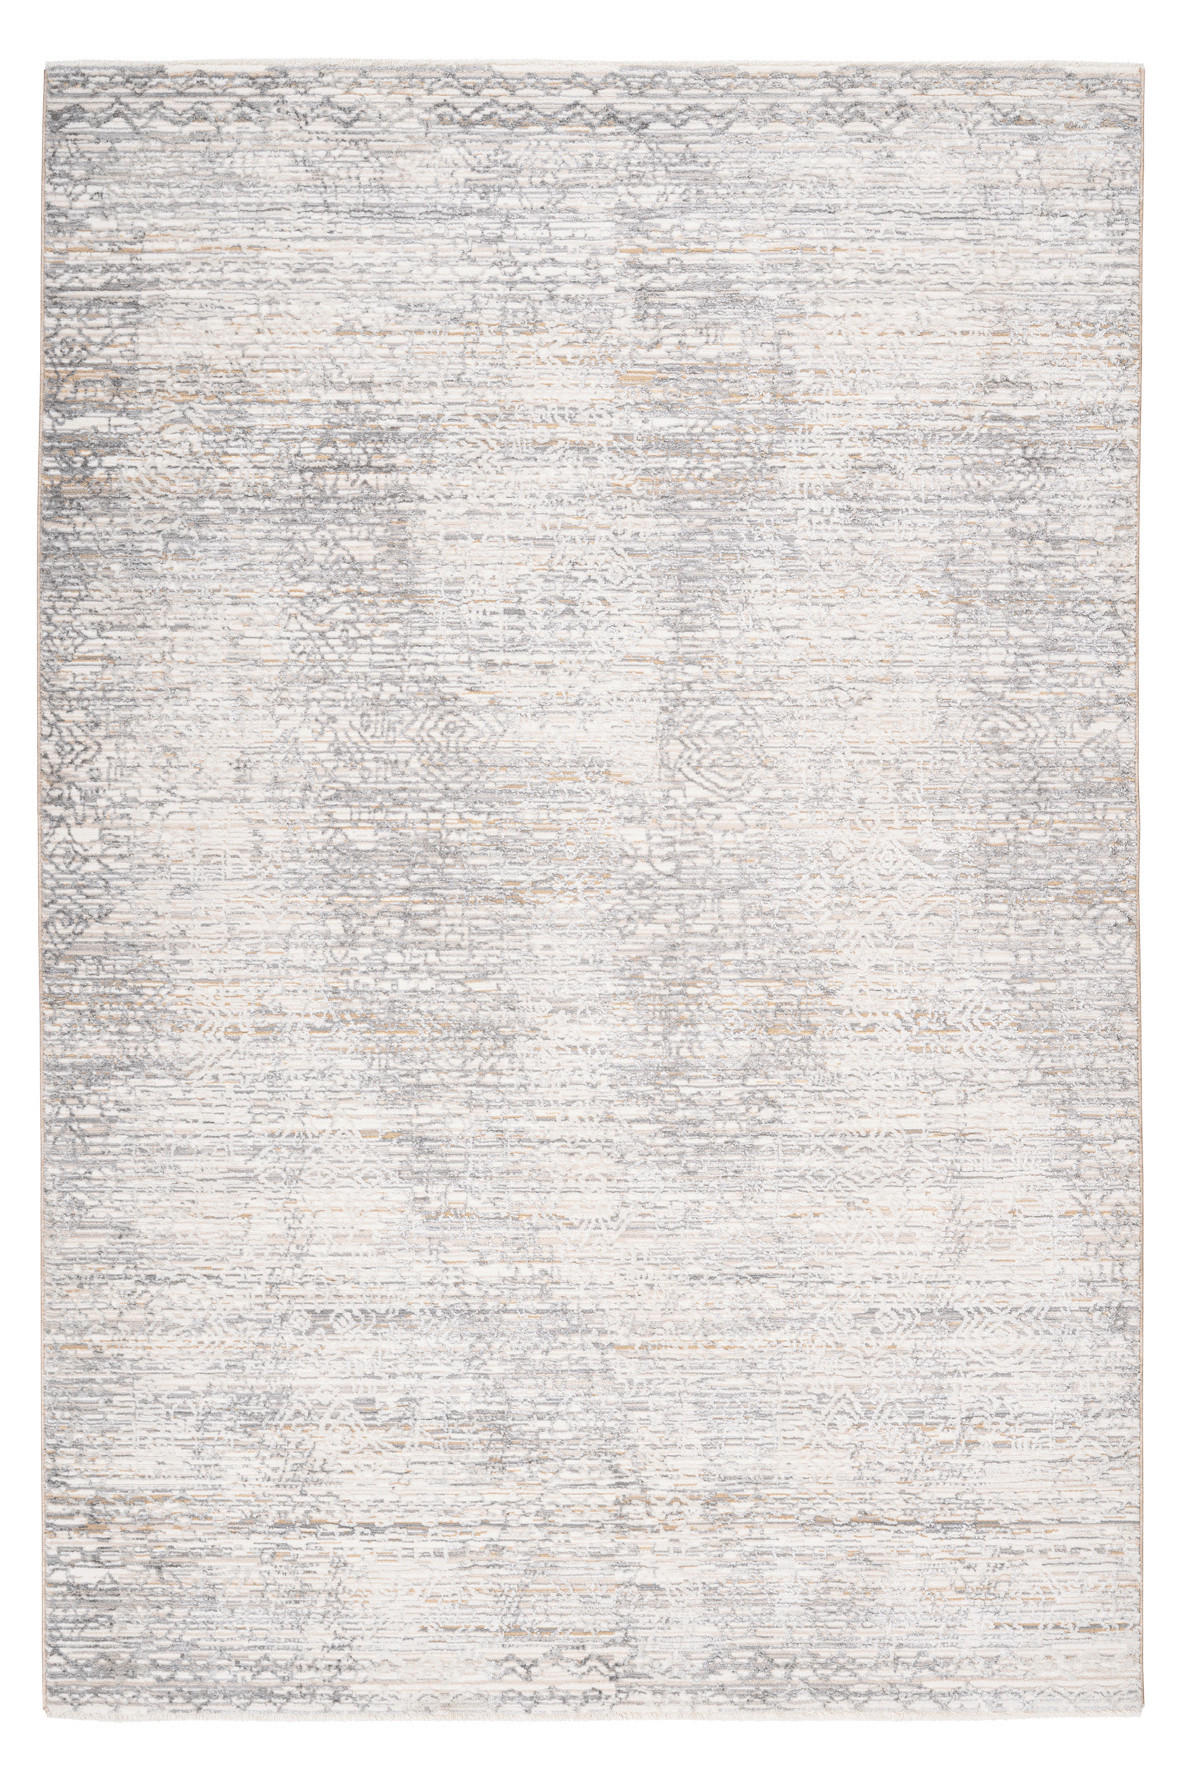 WEBTEPPICH  80/150 cm  Taupe   - Taupe, KONVENTIONELL, Textil (80/150cm) - Novel